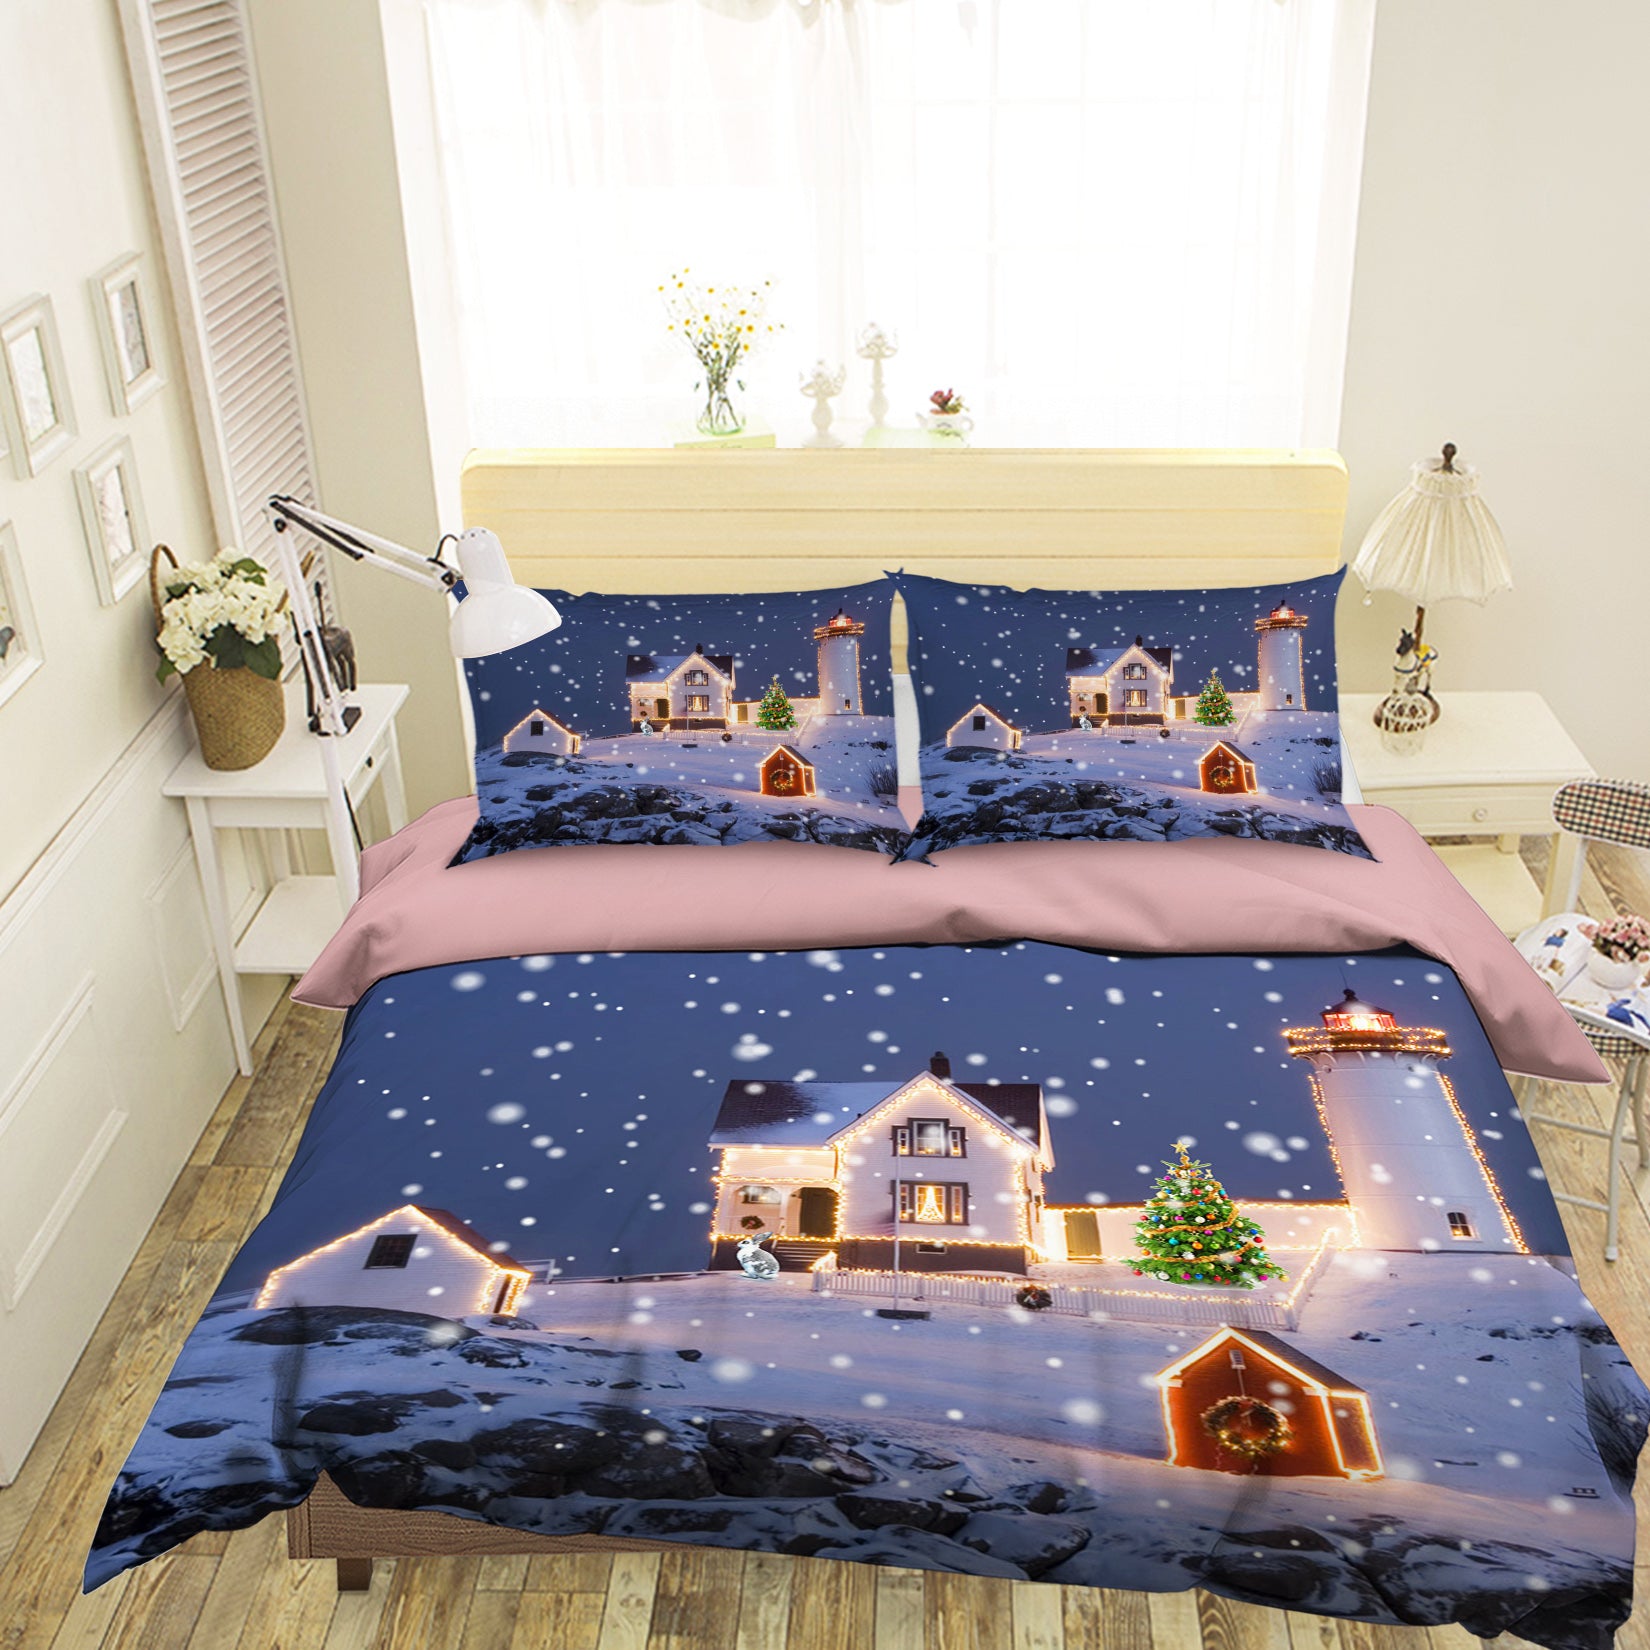 3D Snow House 31131 Christmas Quilt Duvet Cover Xmas Bed Pillowcases